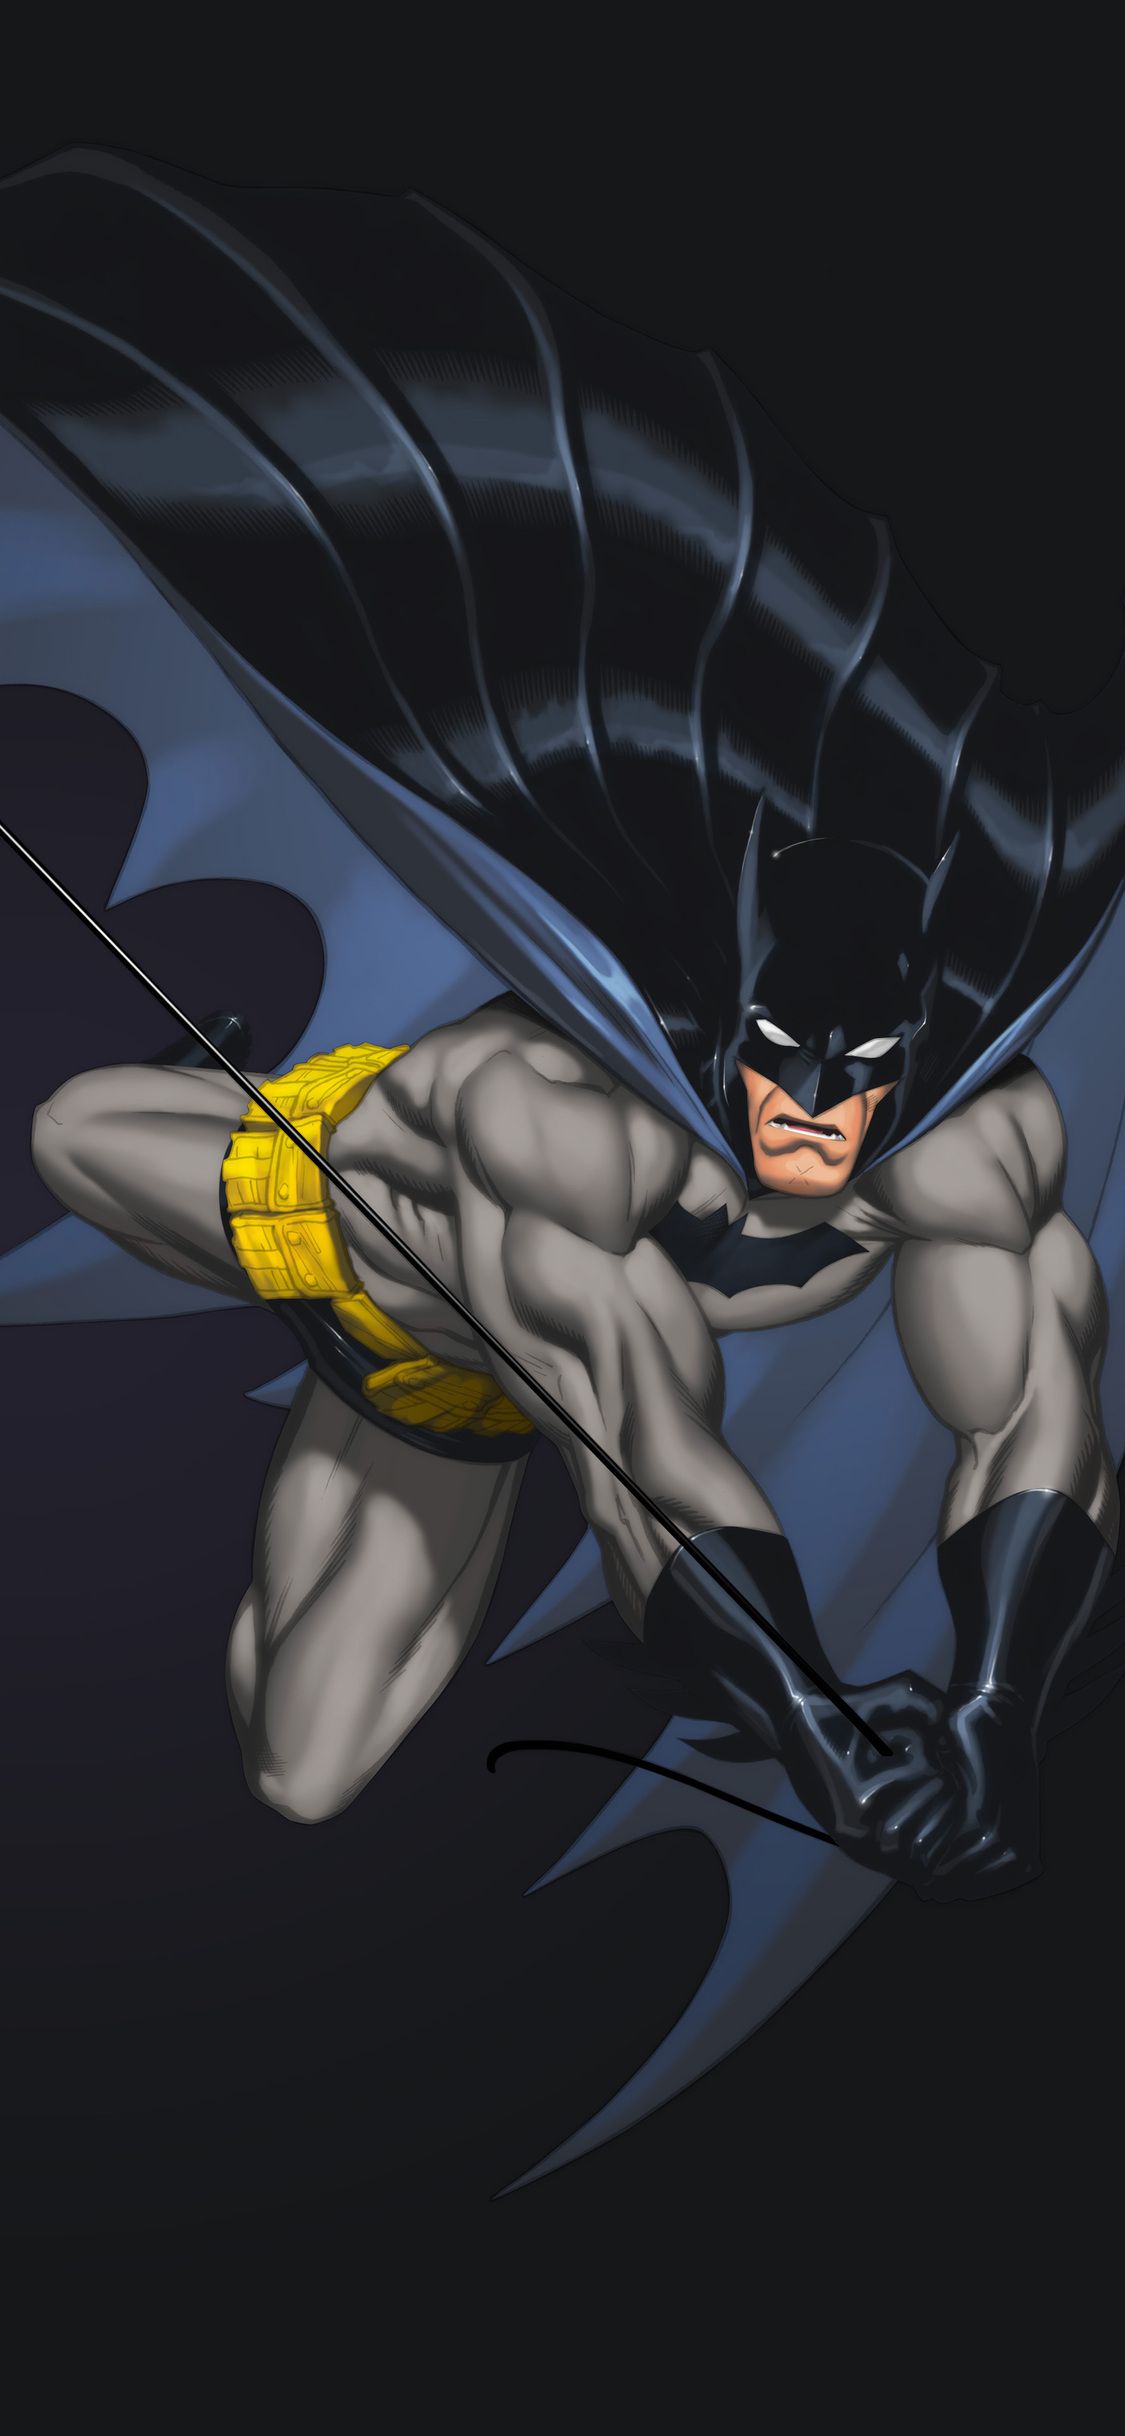 Batman Art 4k Superhero iPhone XS, iPhone iPhone X HD 4k Wallpaper, Image, Background, Photo and Picture